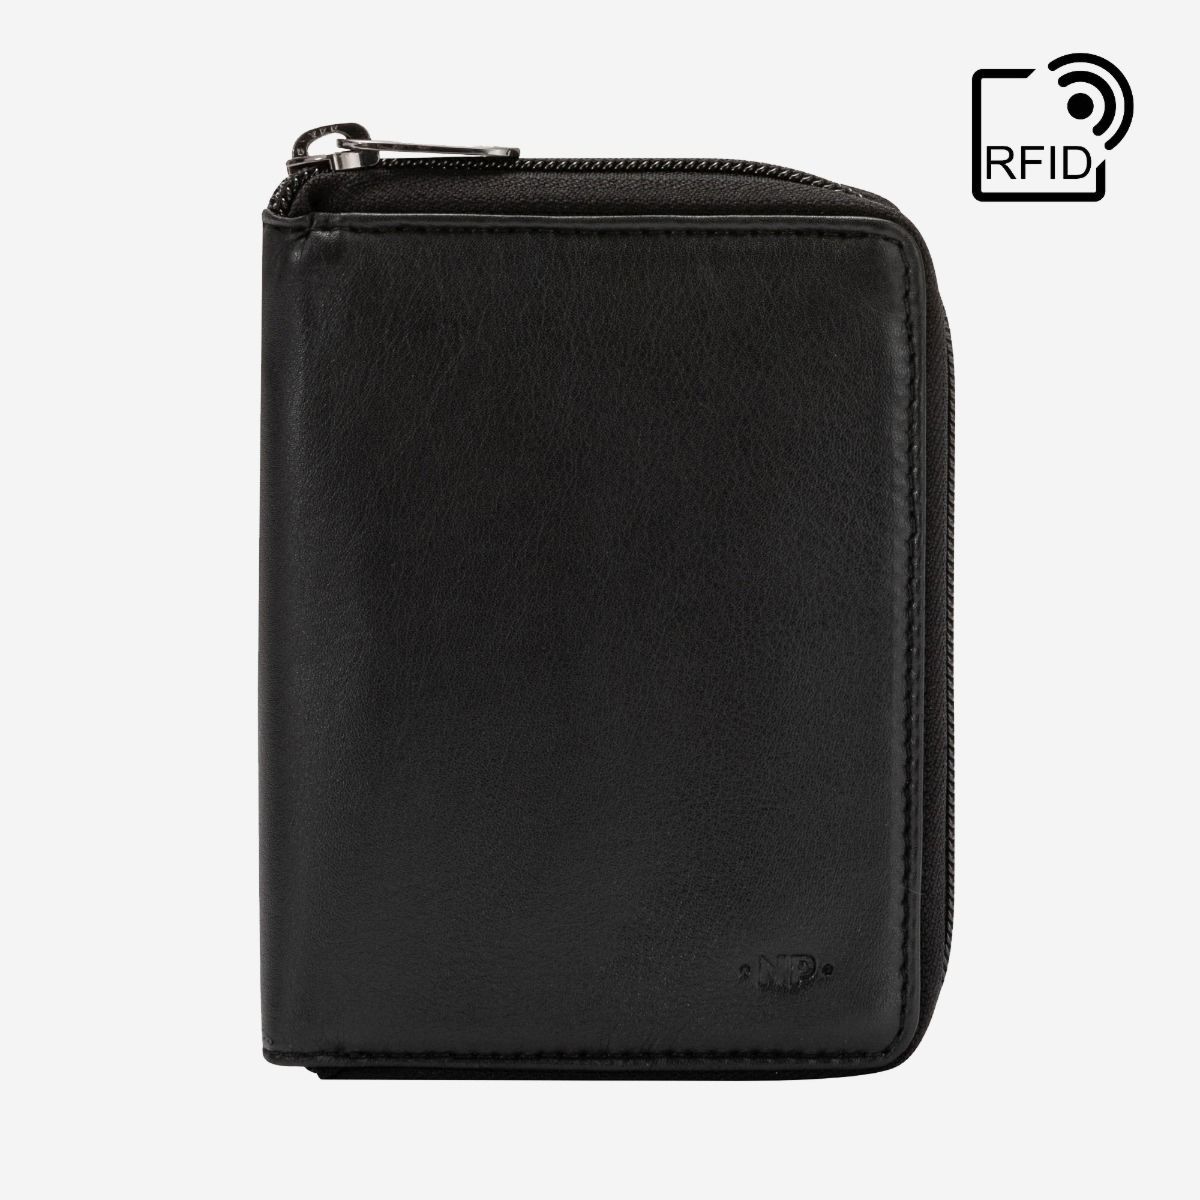 NUVOLA PELLE RFID Mens Leather Wallet with Zip - Black